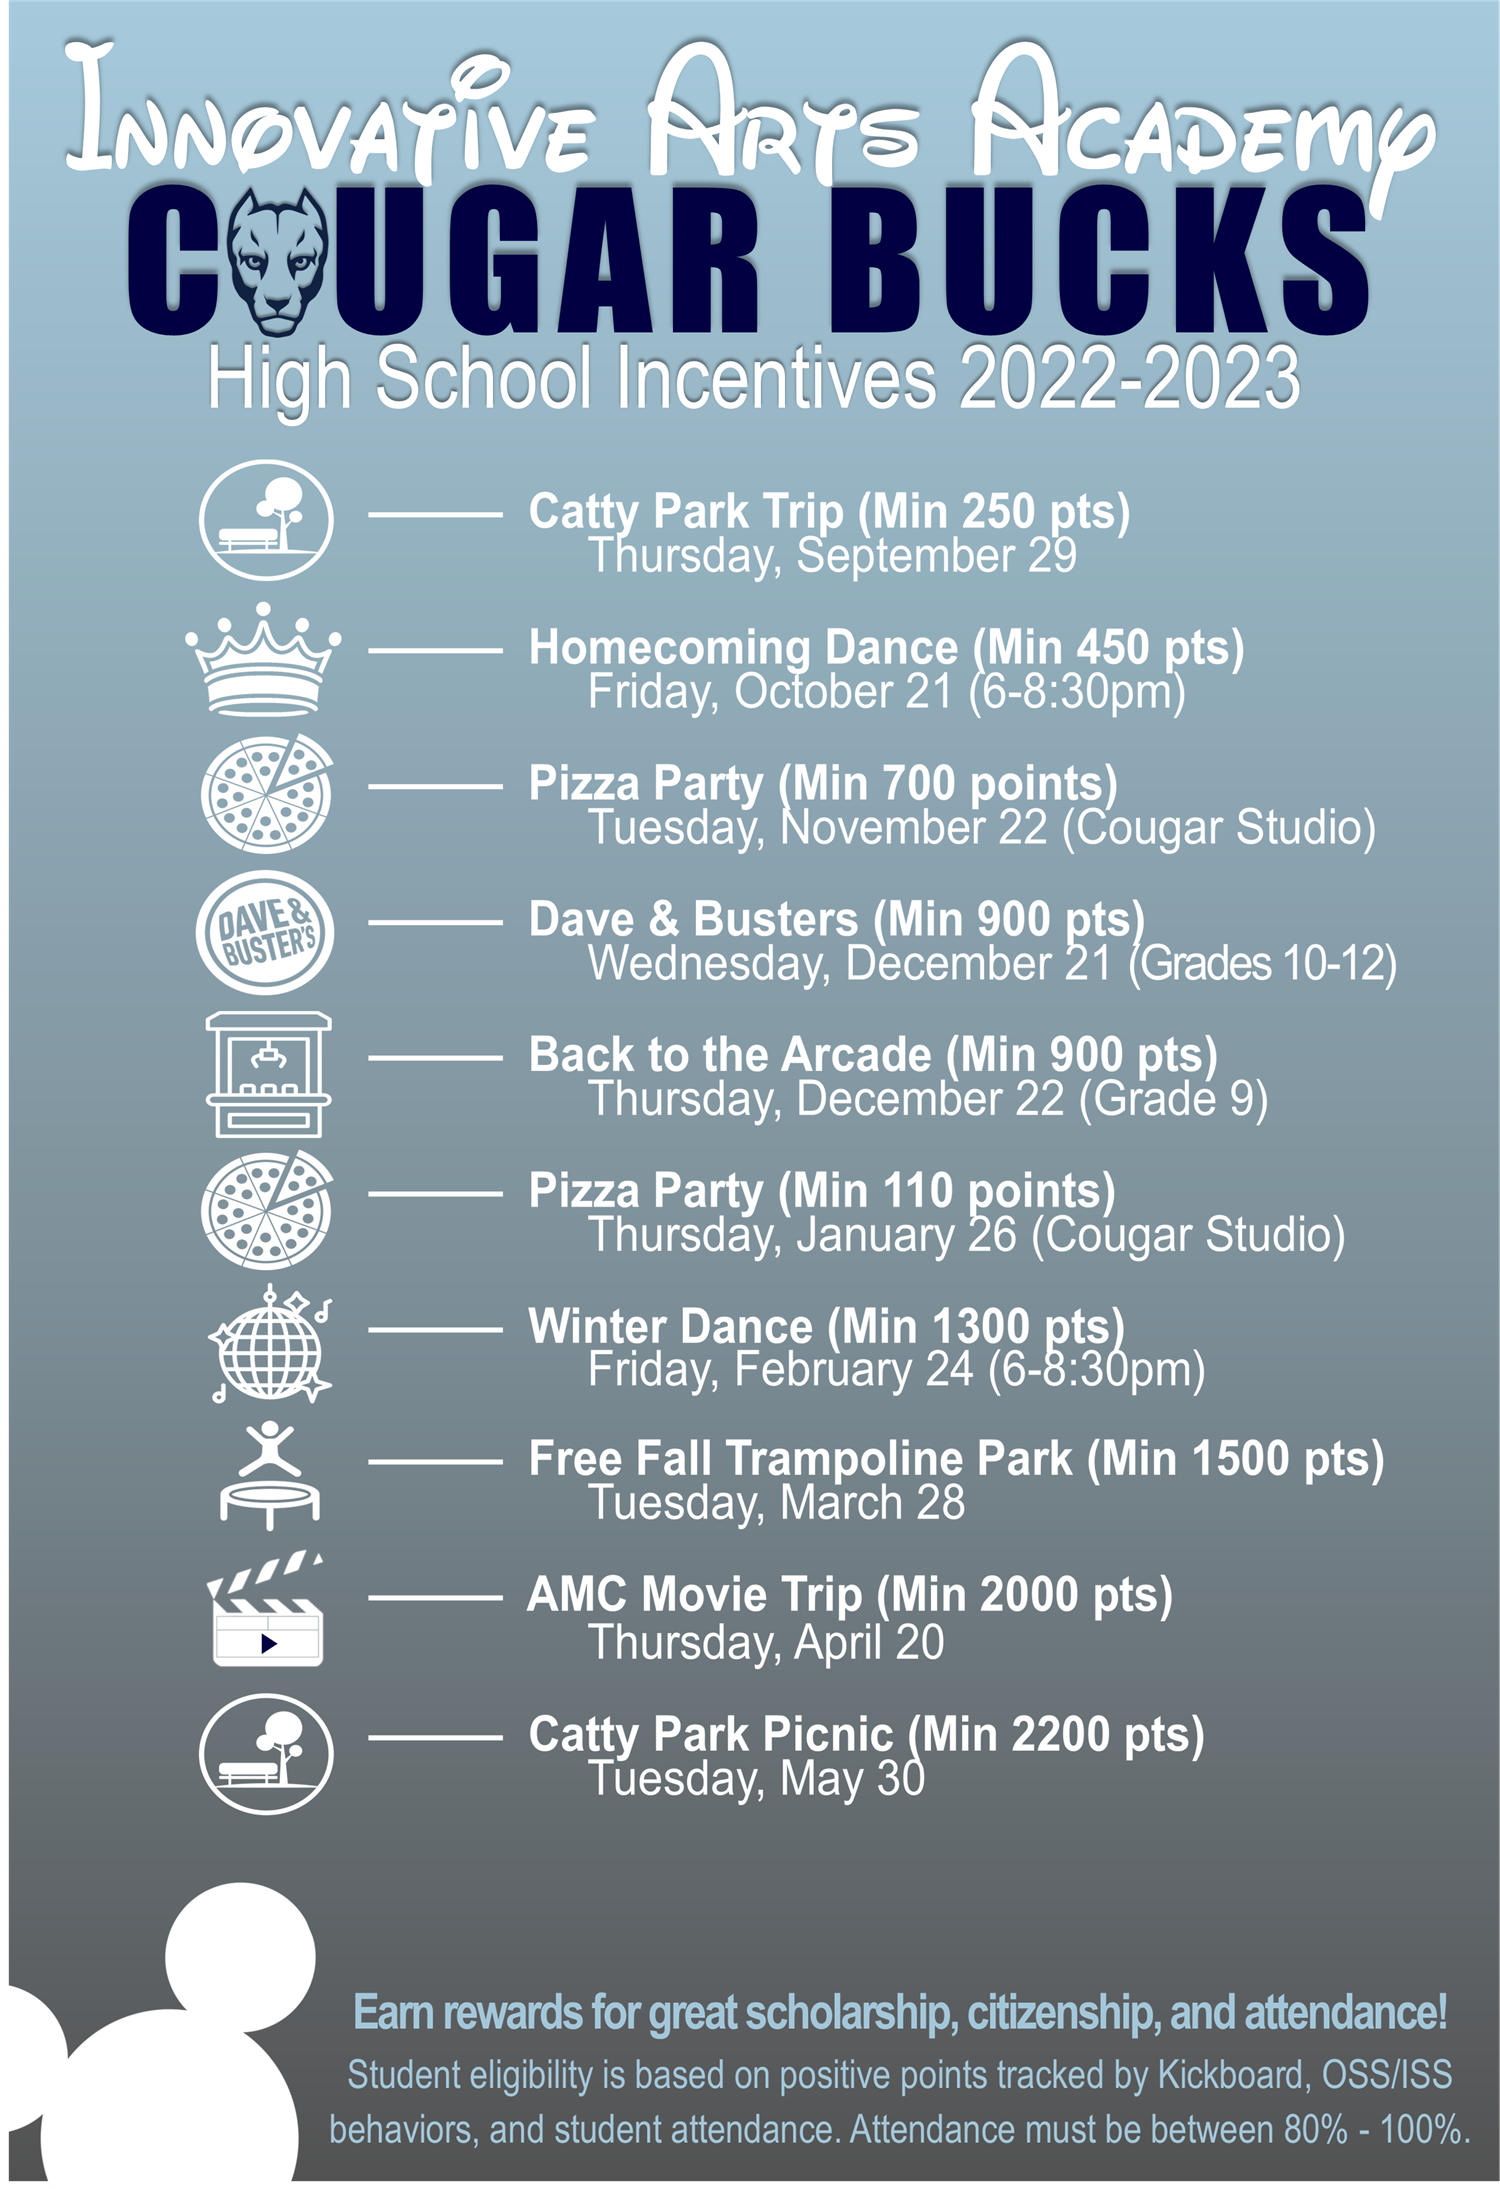  HS Cougar Bucks Incentives 2022/2023